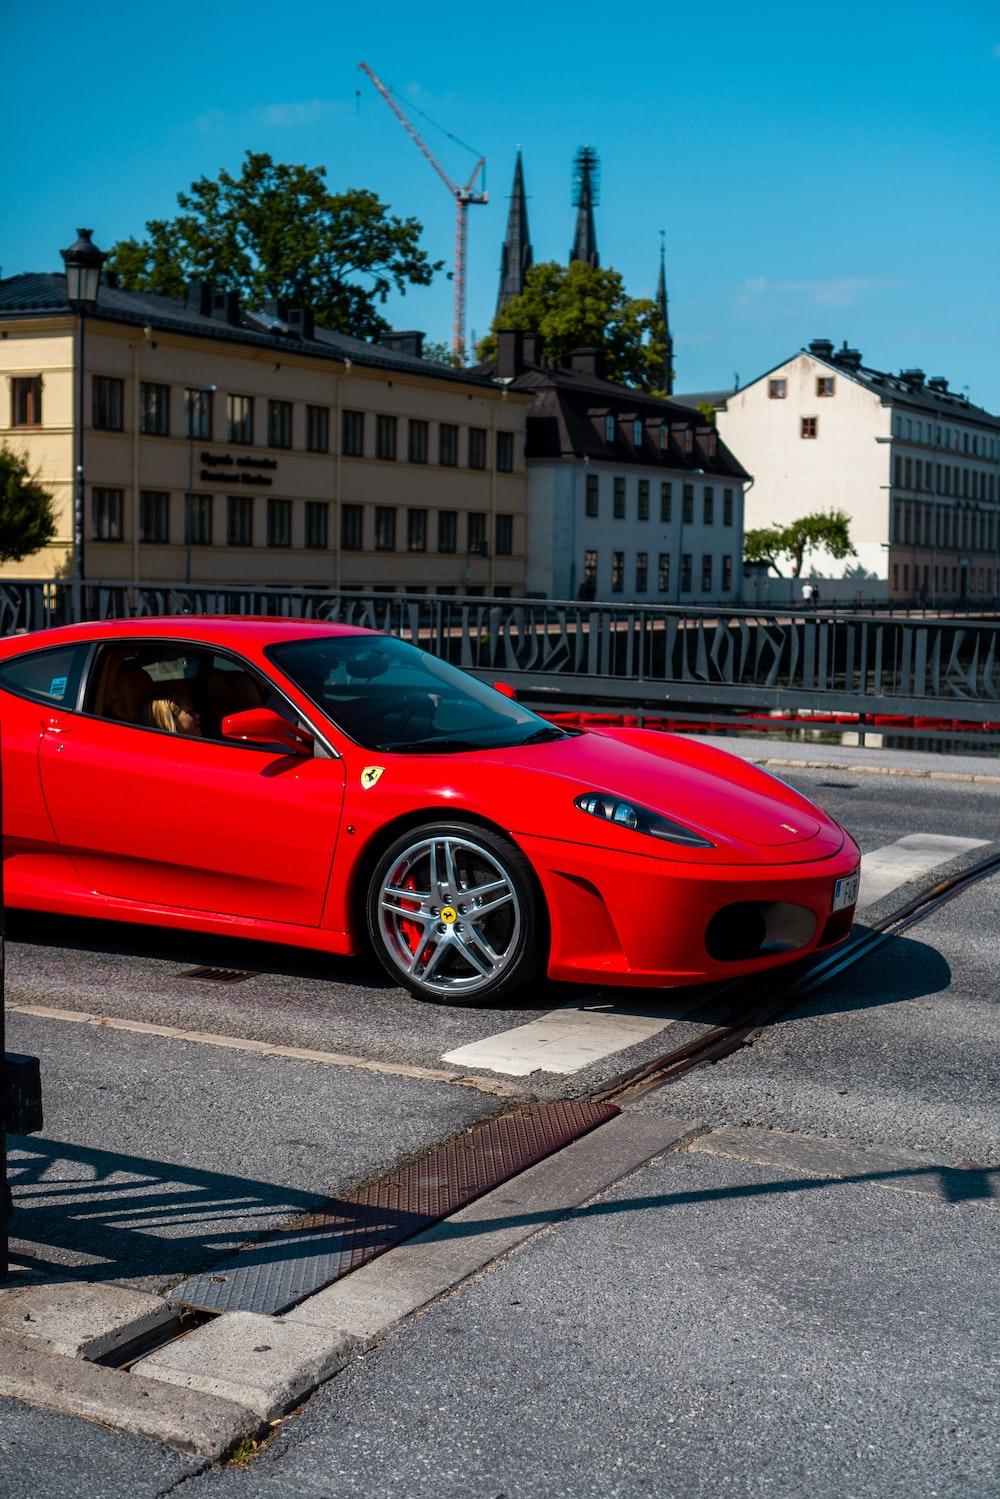 Red Ferrari Italia Parked On Sidewalk During Daytime Photo